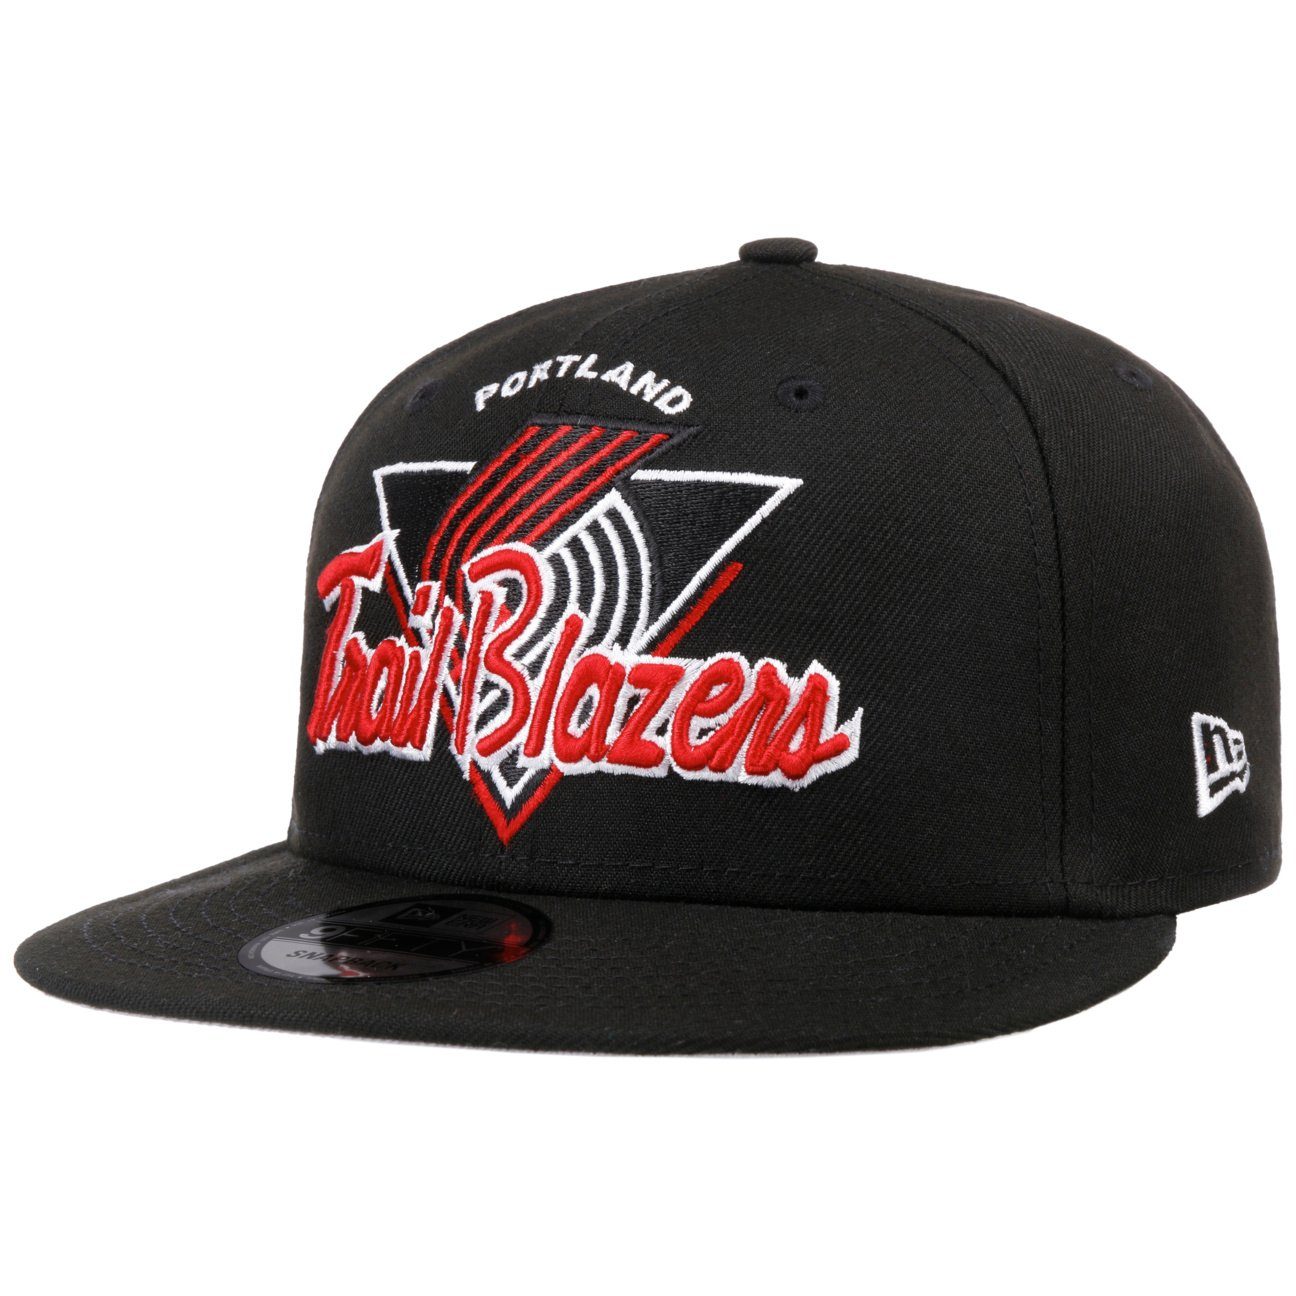 New Era Baseball Cap (1-St) Basecap Snapback